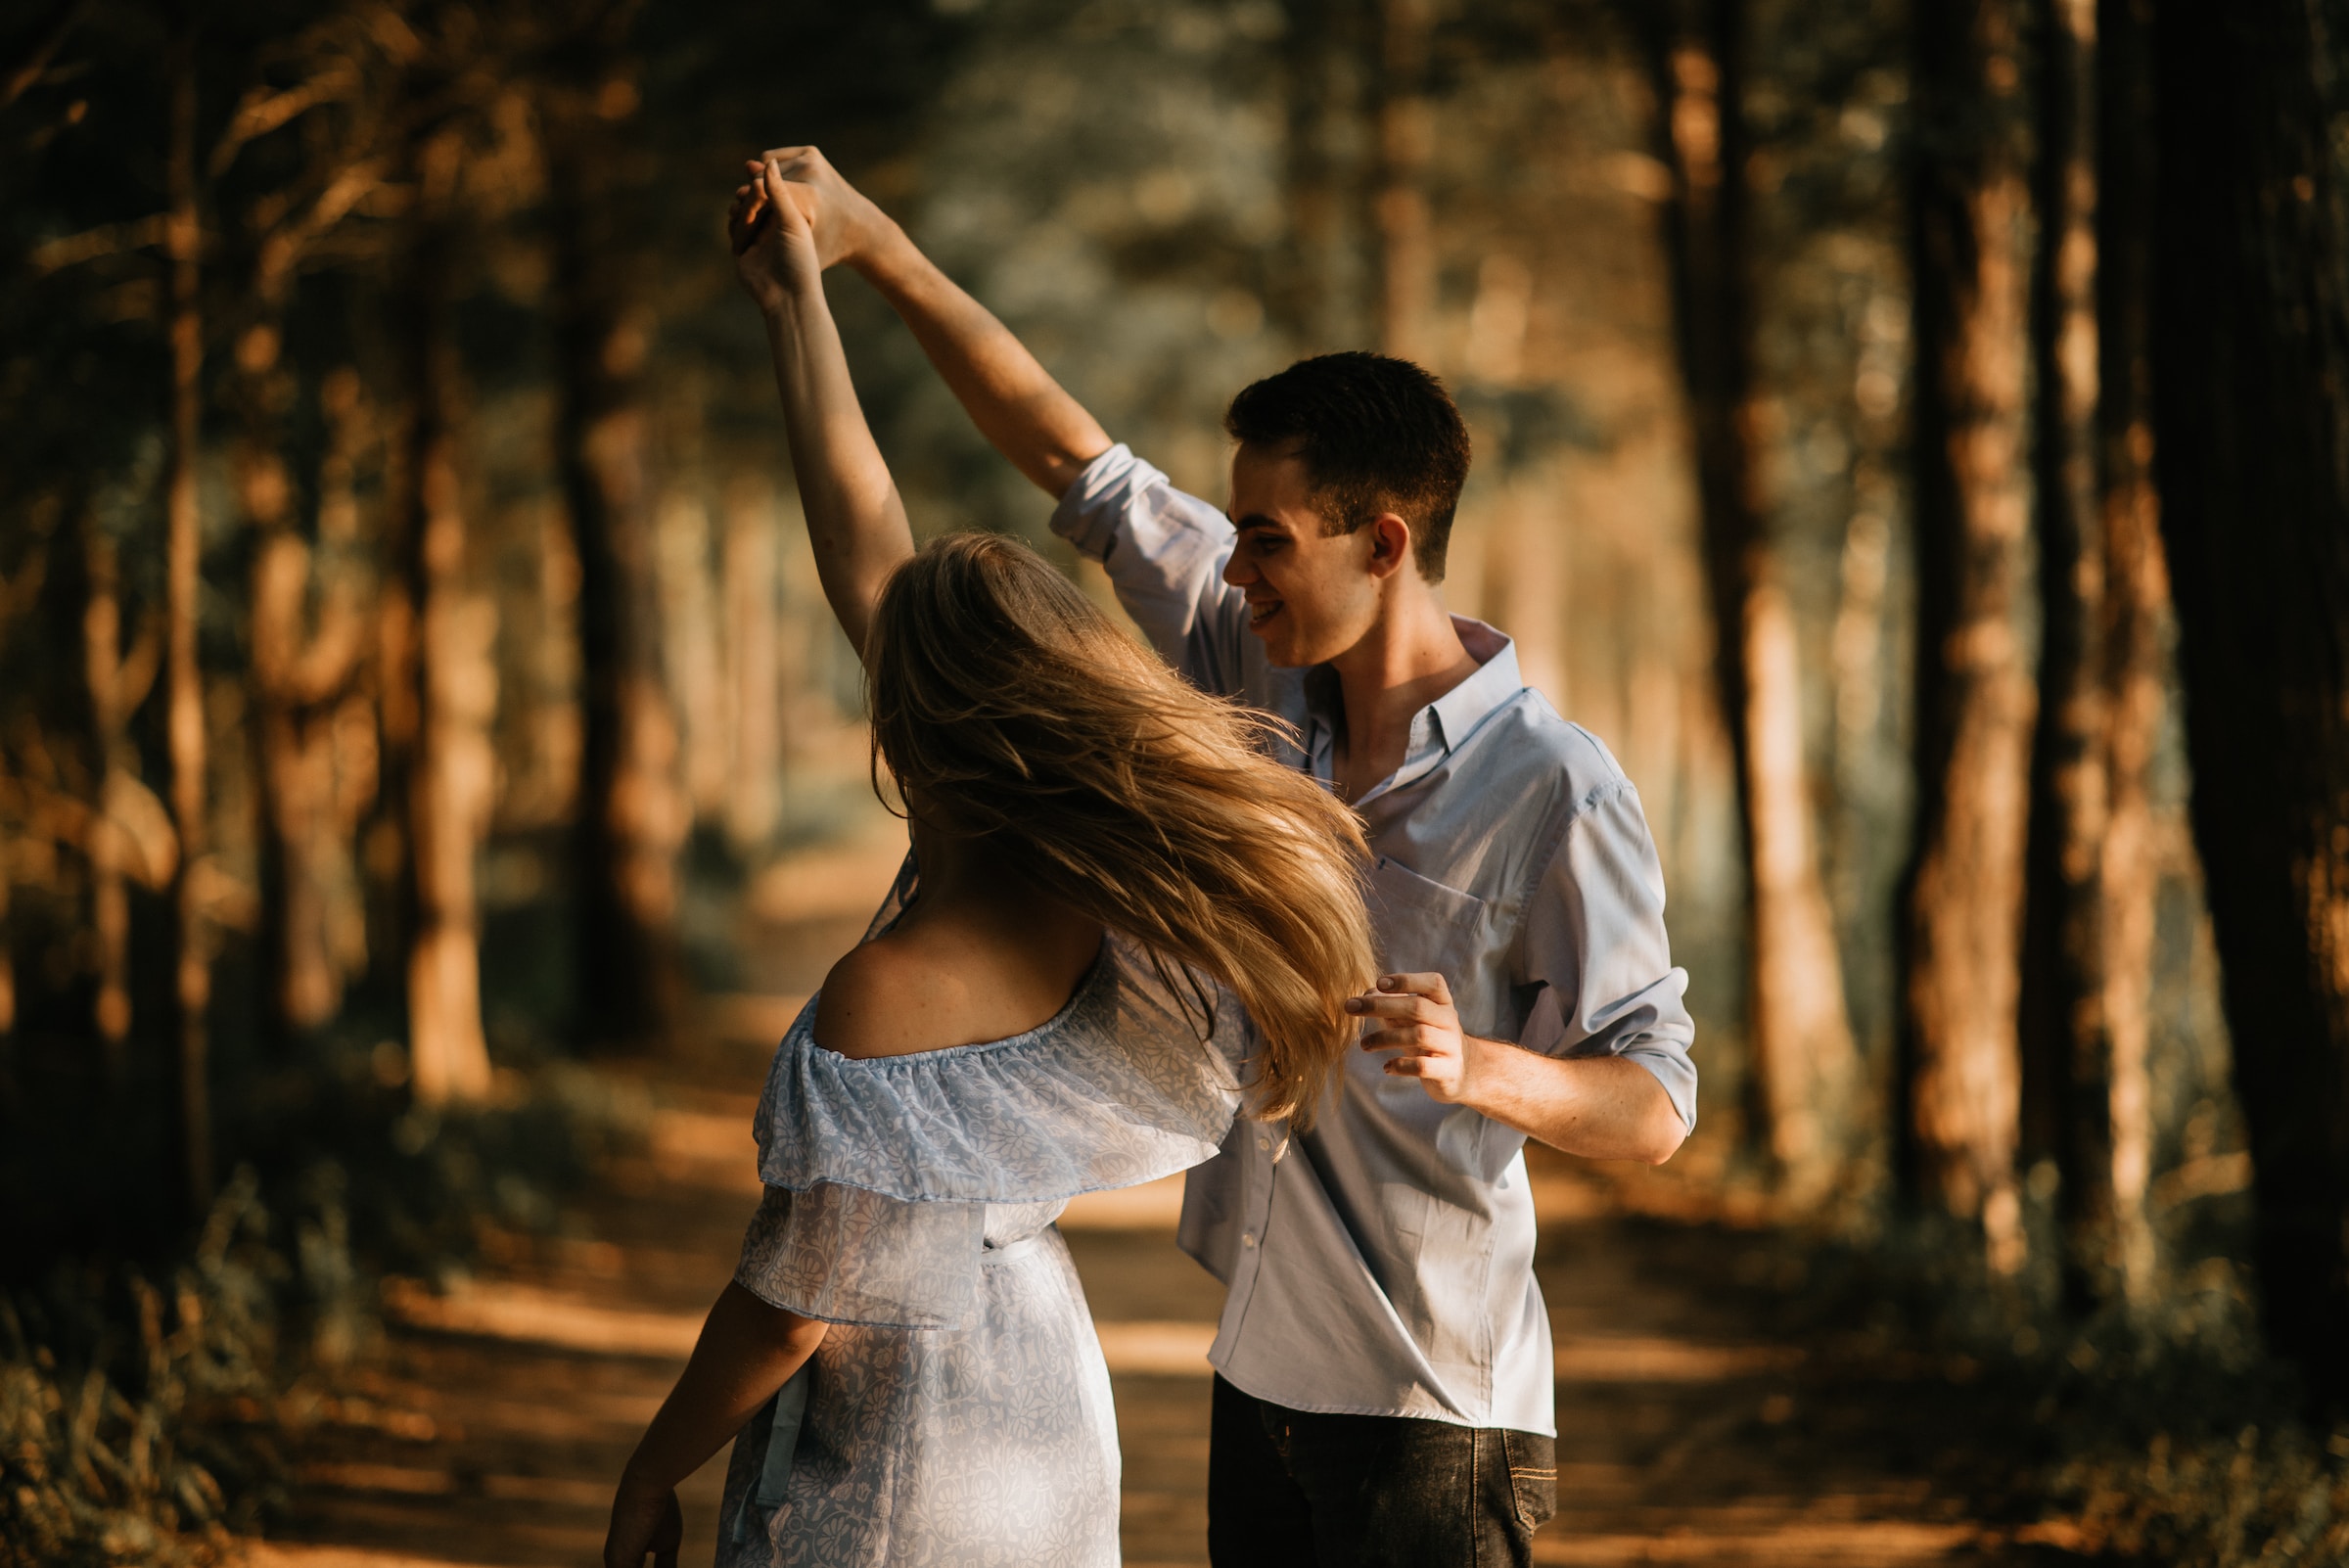 Couple dancing in the woods. | Source: Unsplash